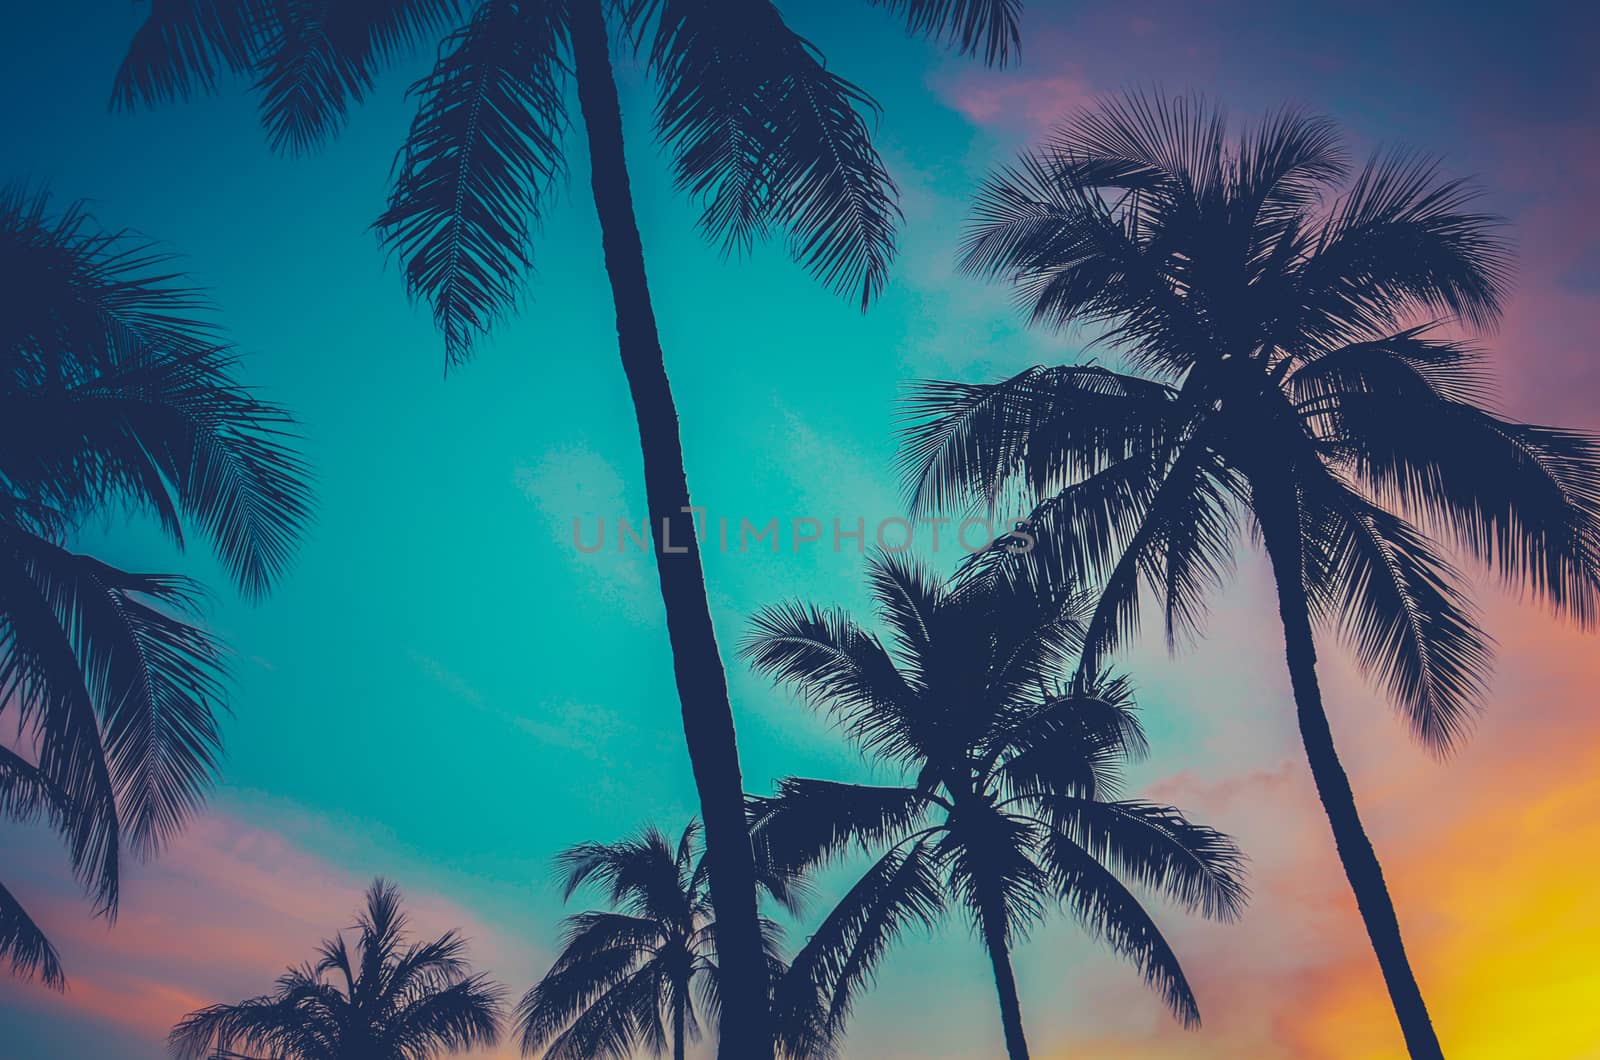 Hawaii Palm Trees At Sunset by mrdoomits